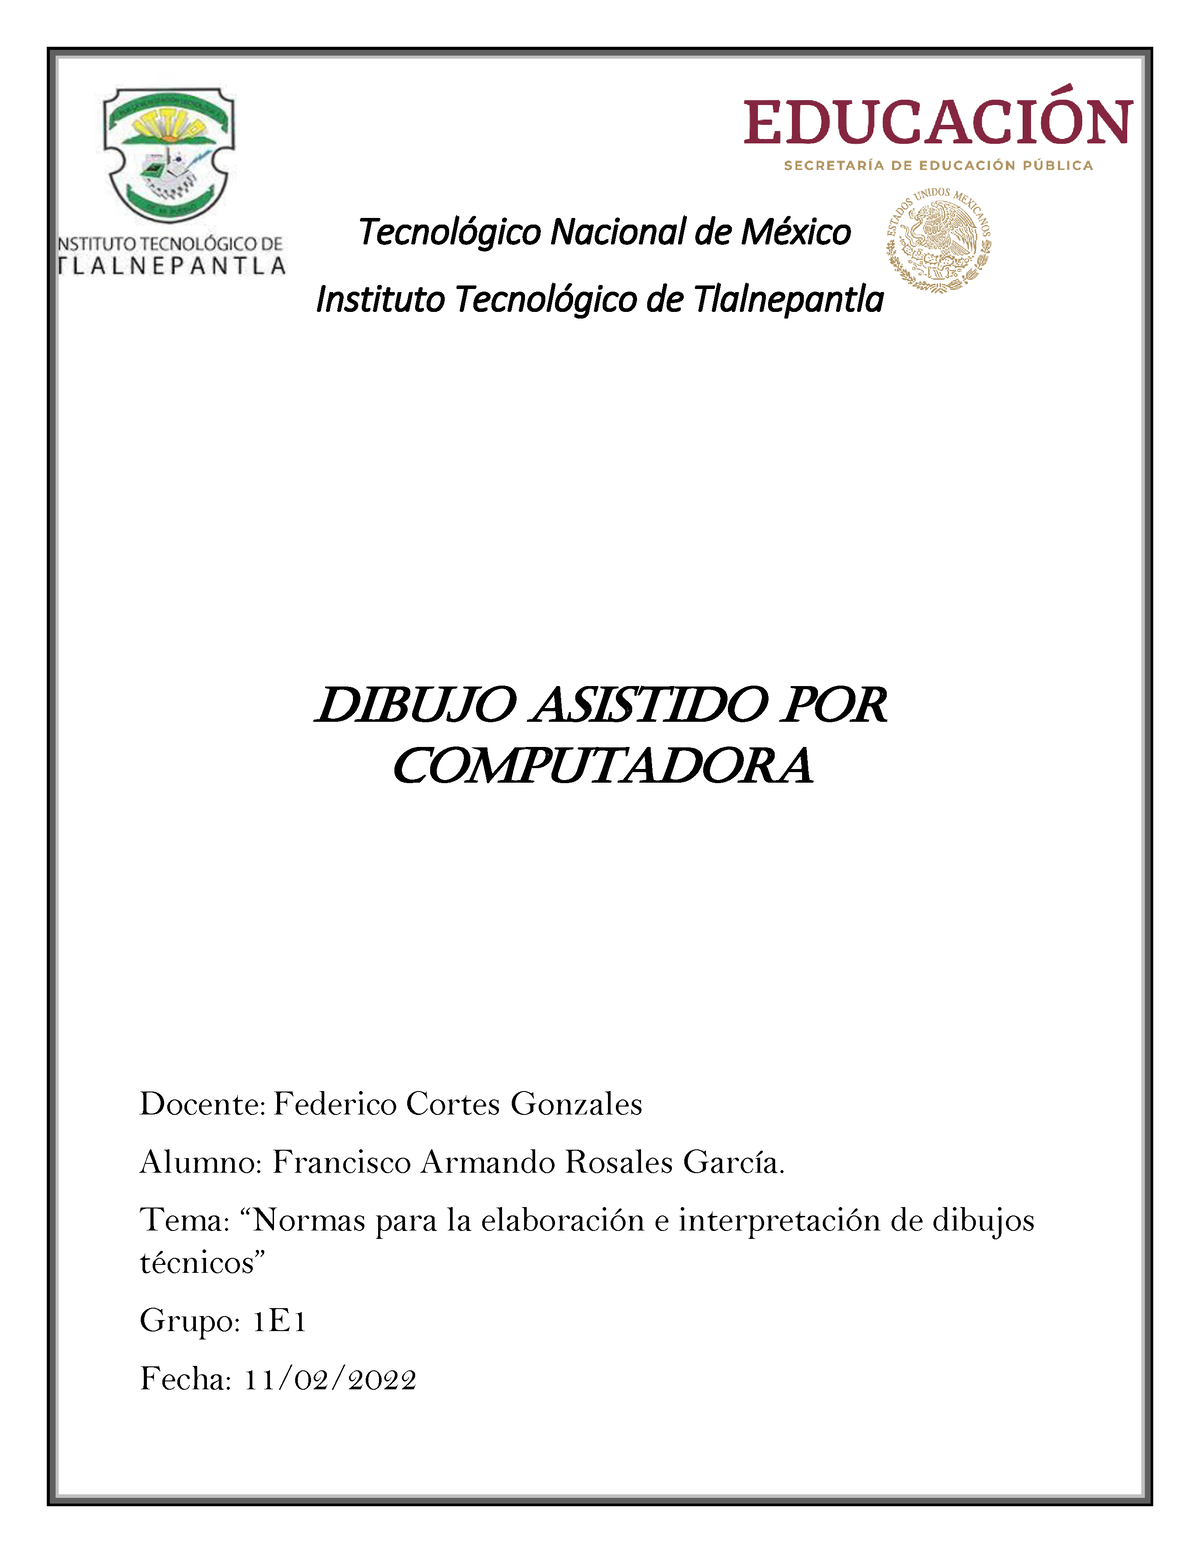 Normas de dibujo - Tecnológico Nacional de México Instituto Tecnológico de  Tlalnepantla Dibujo - Studocu